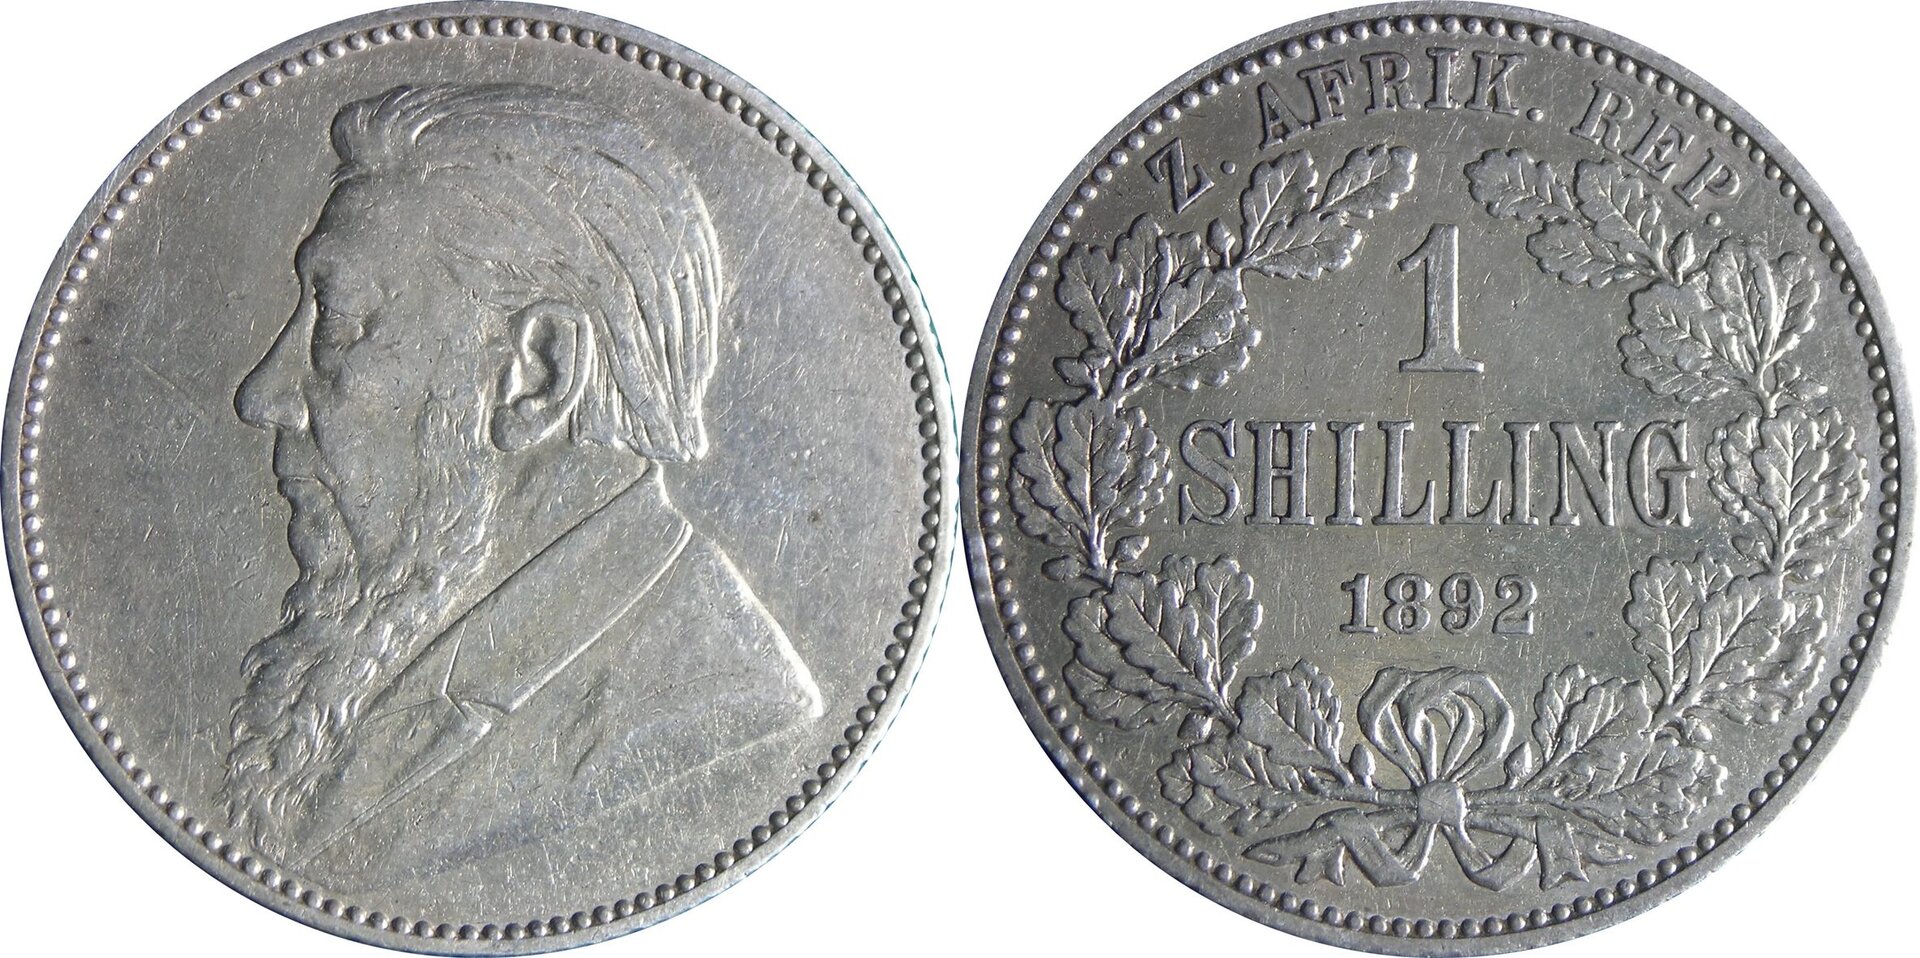 1892 ZAR shilling.jpg